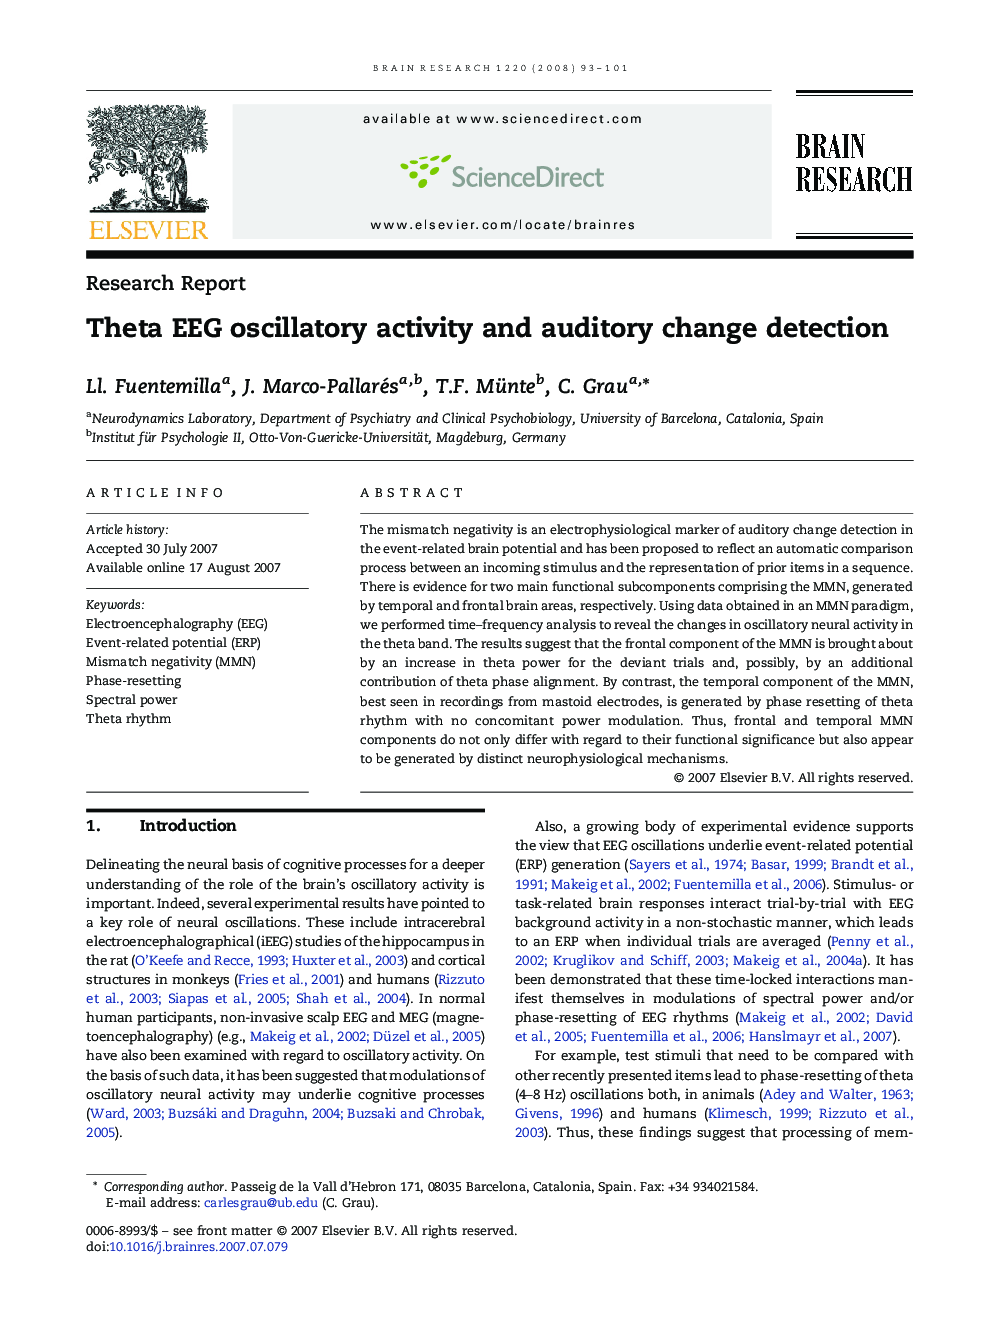 Theta EEG oscillatory activity and auditory change detection